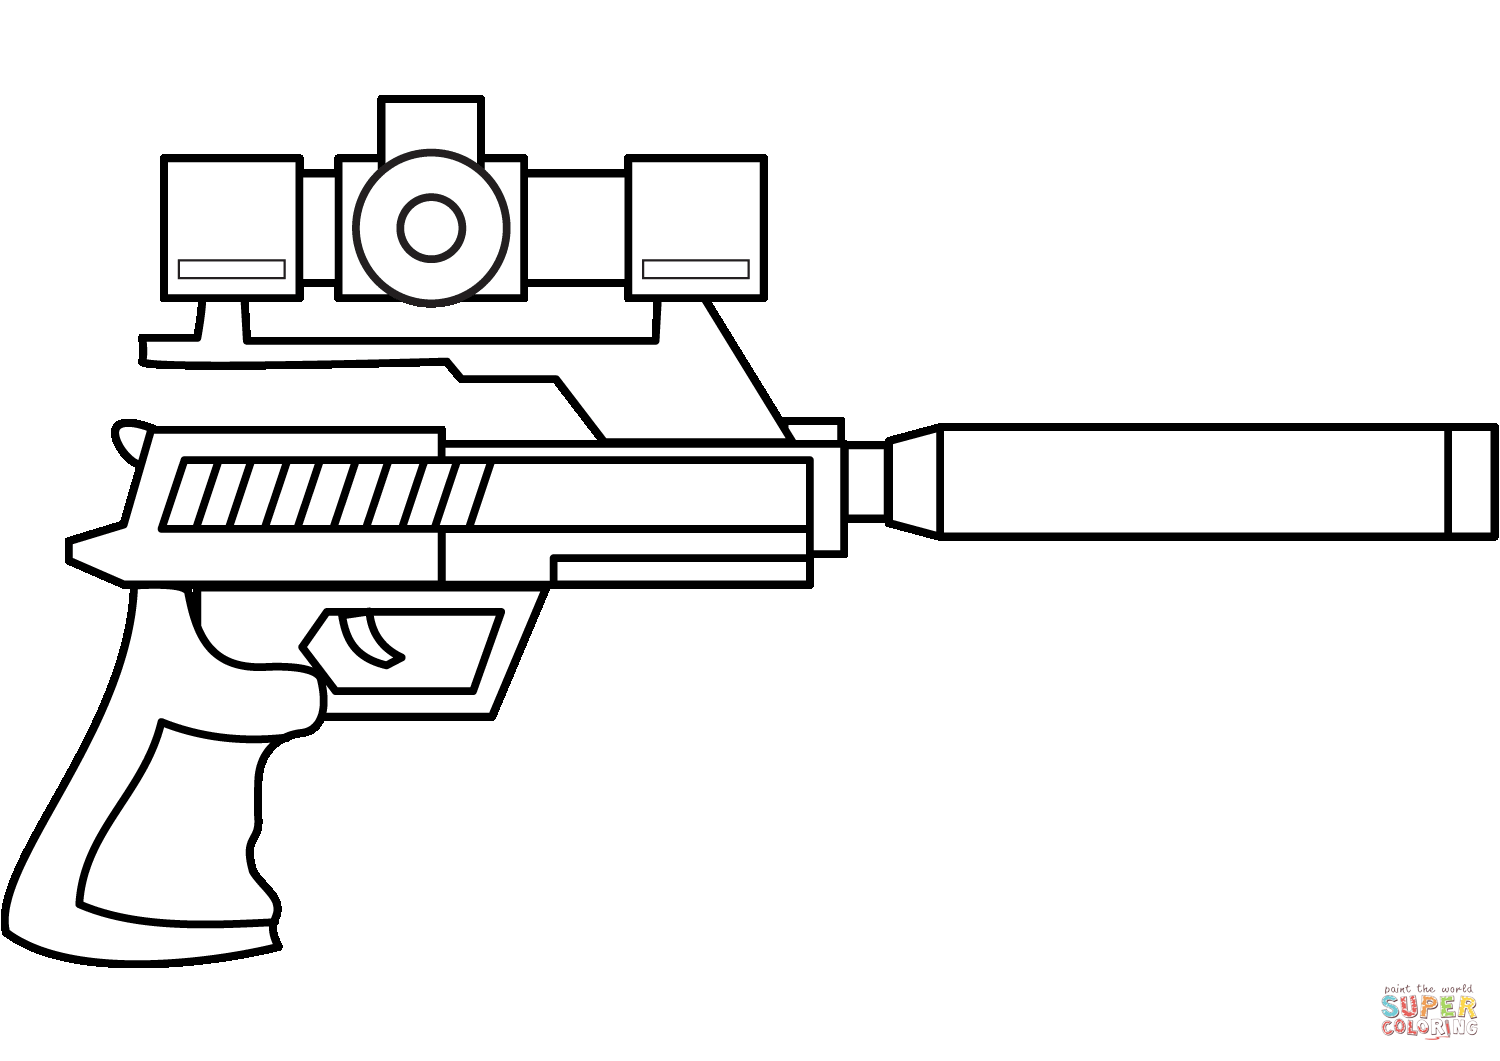 New Sniper Gun